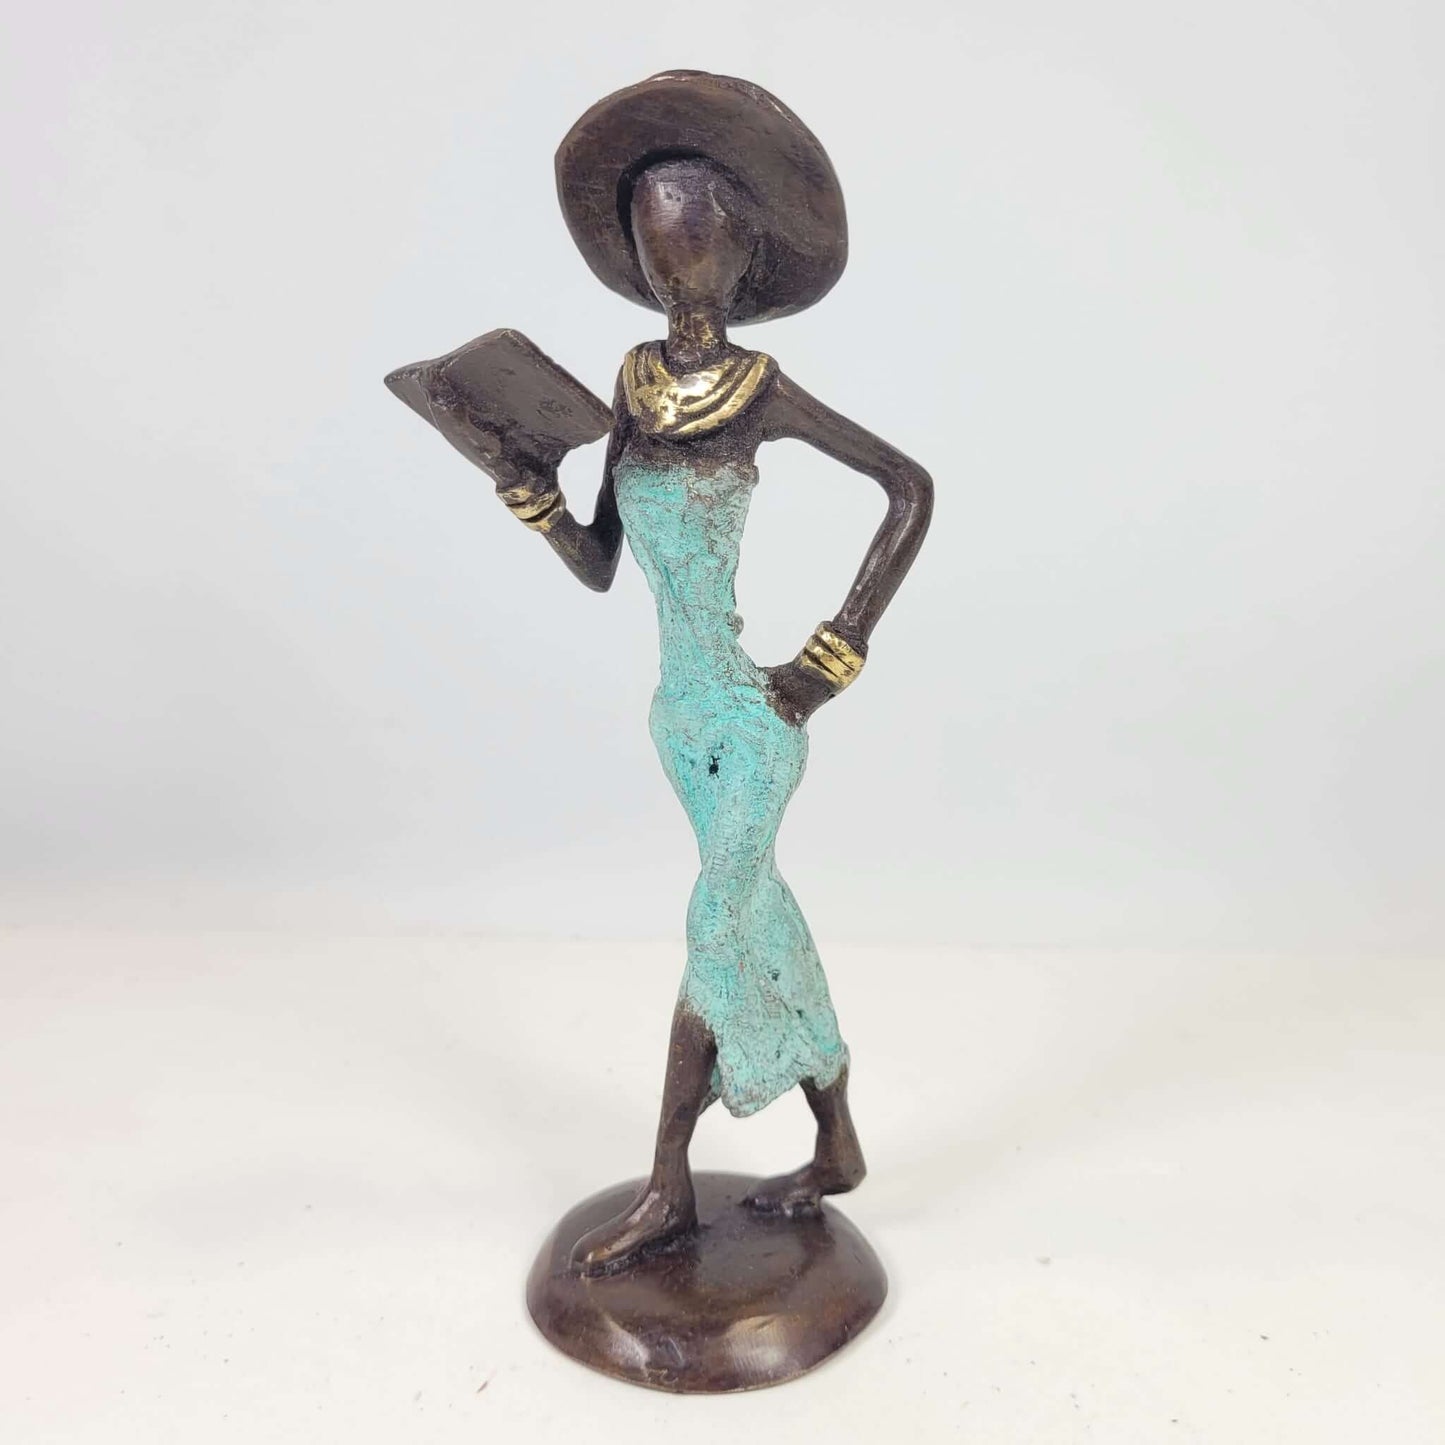 Bronze-Skulptur "Femme avec livre et chapeau" by Soré | verschiedene Größen und Farben